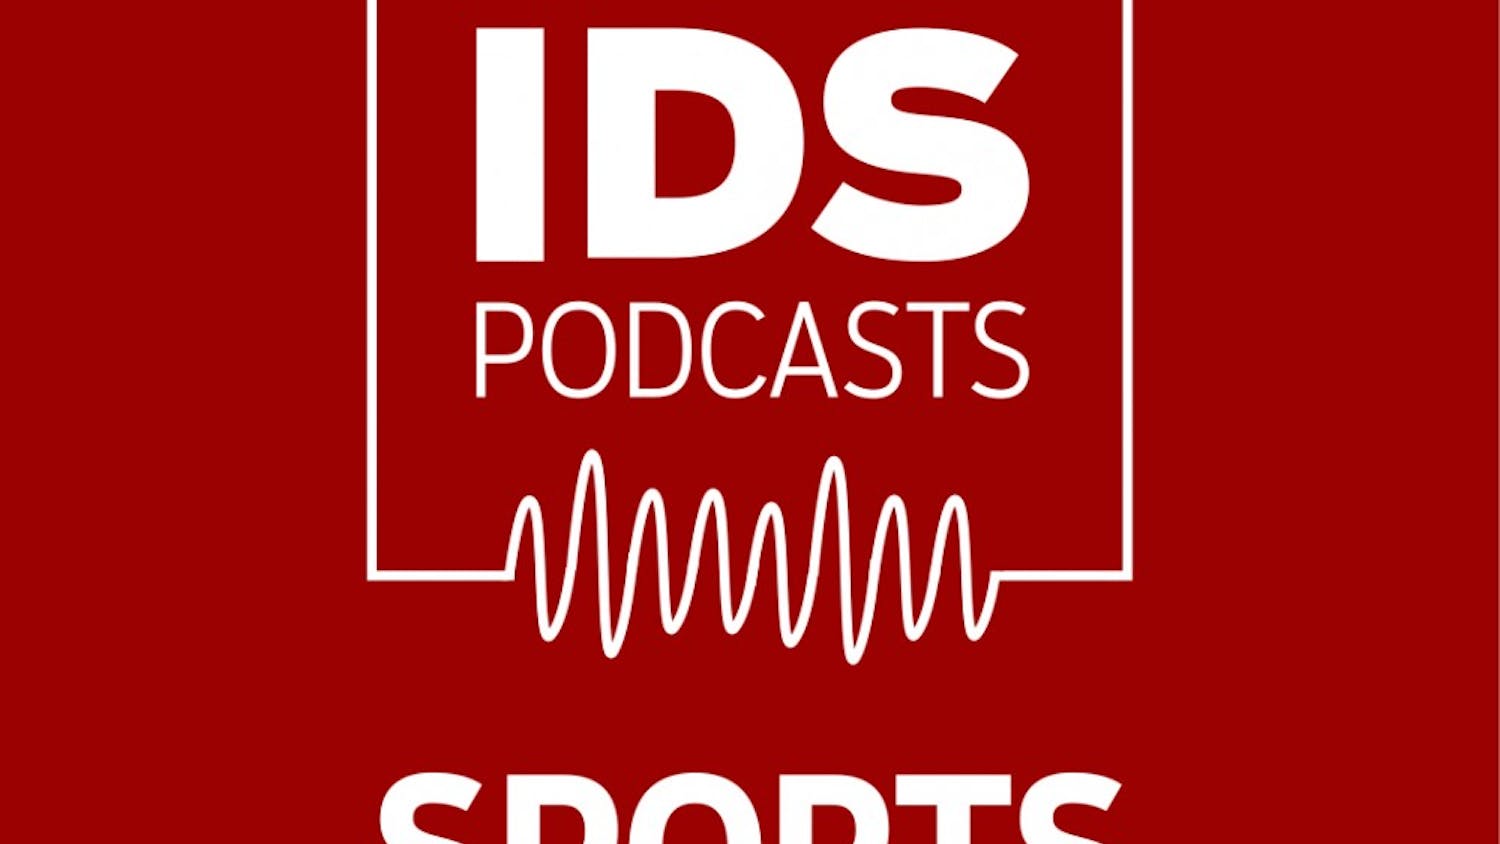 IDS Sports Podcast.jpg